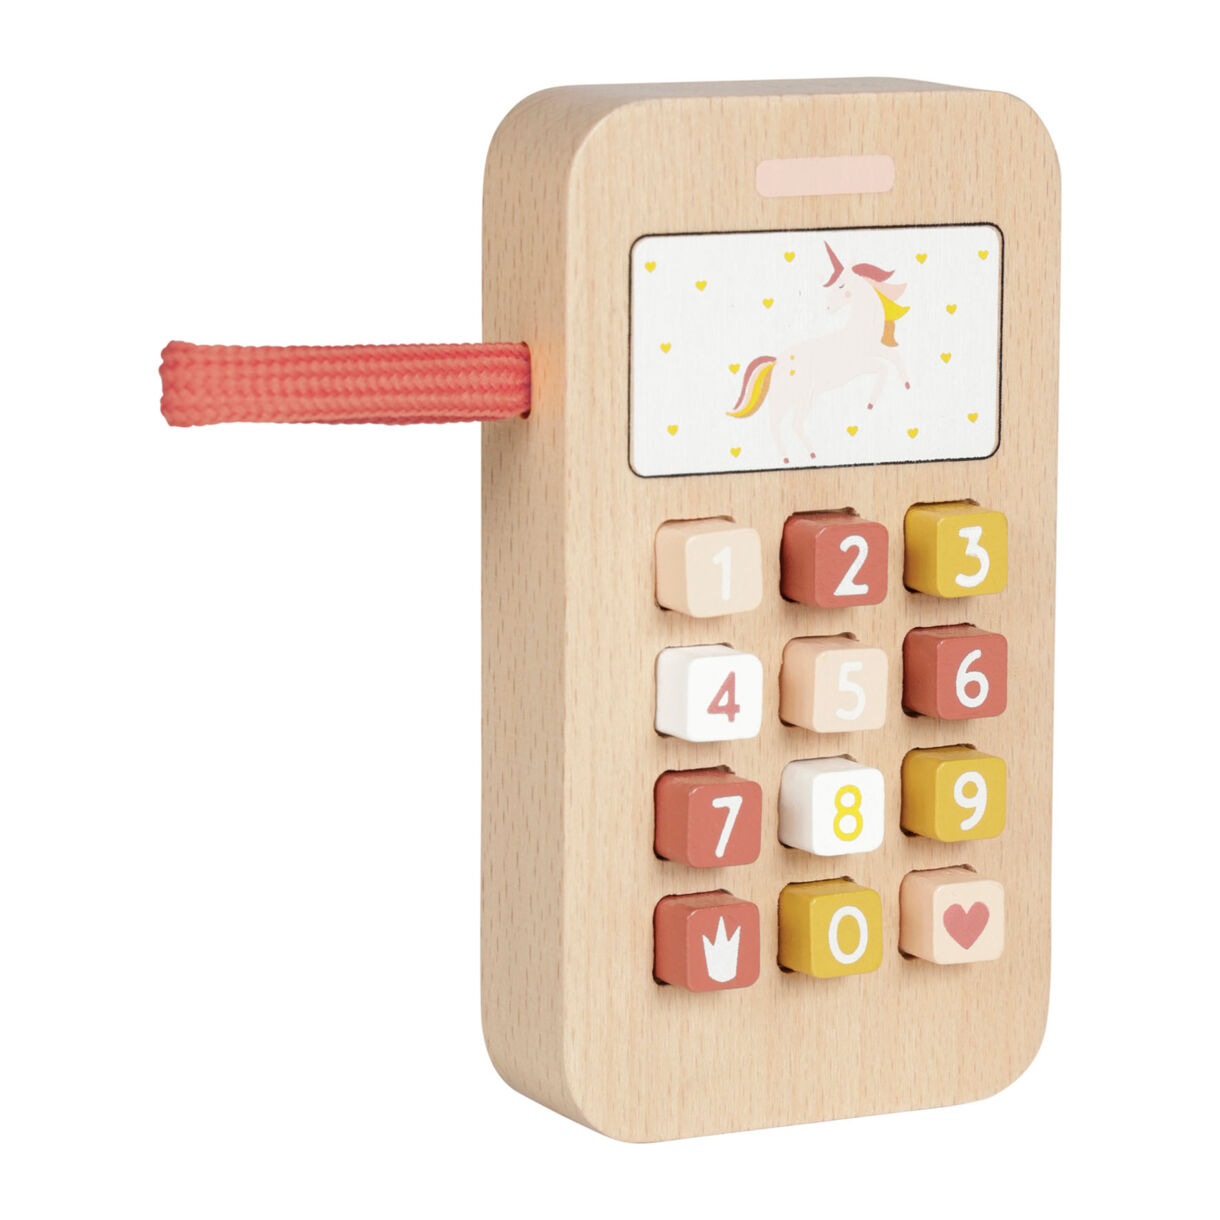 TELEPHONE BOIS ROSE Dim : 6.7x11.4x2.5cm